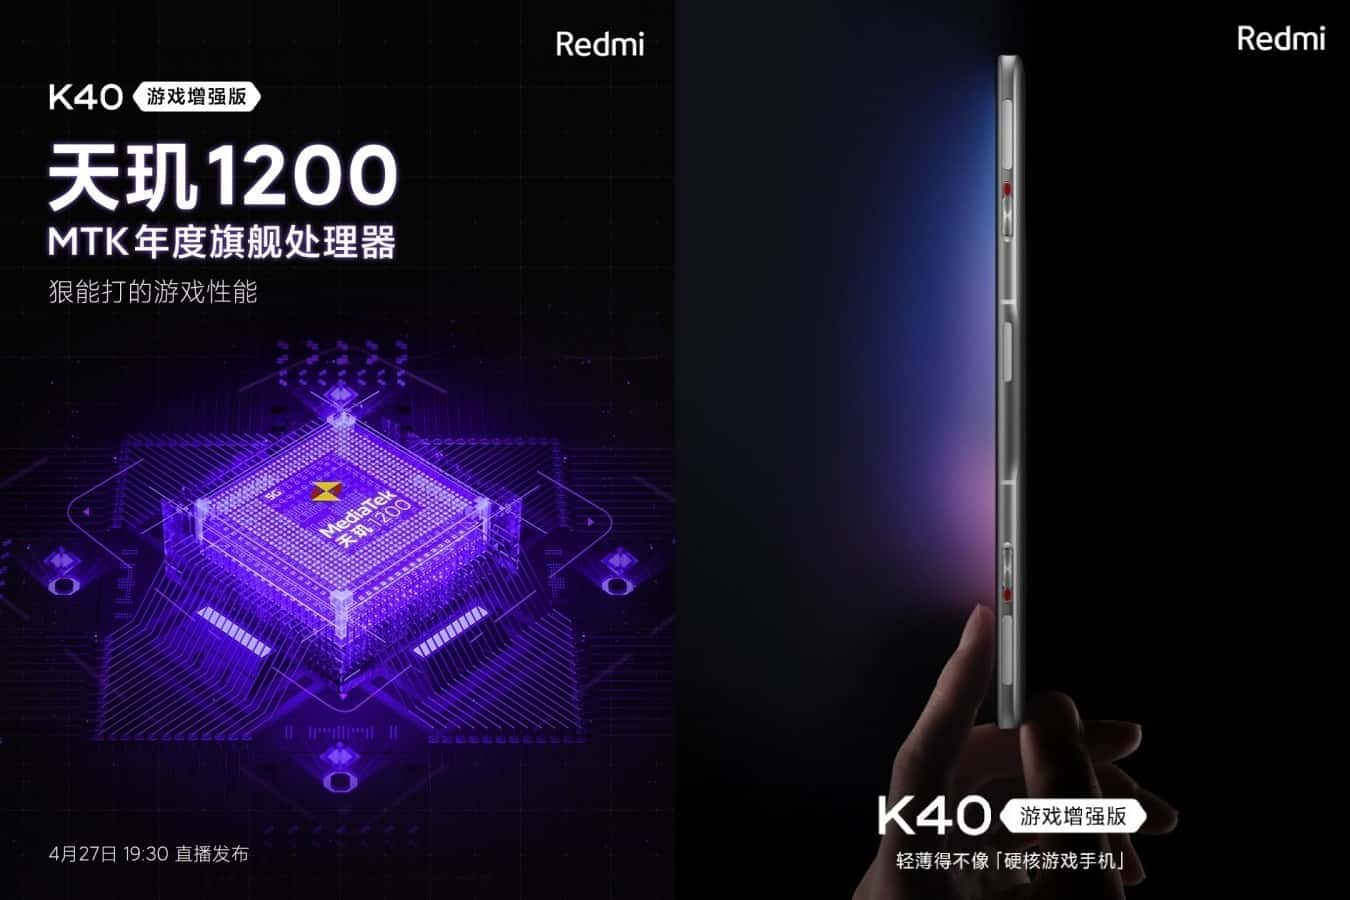 redmi k40 gaming edition